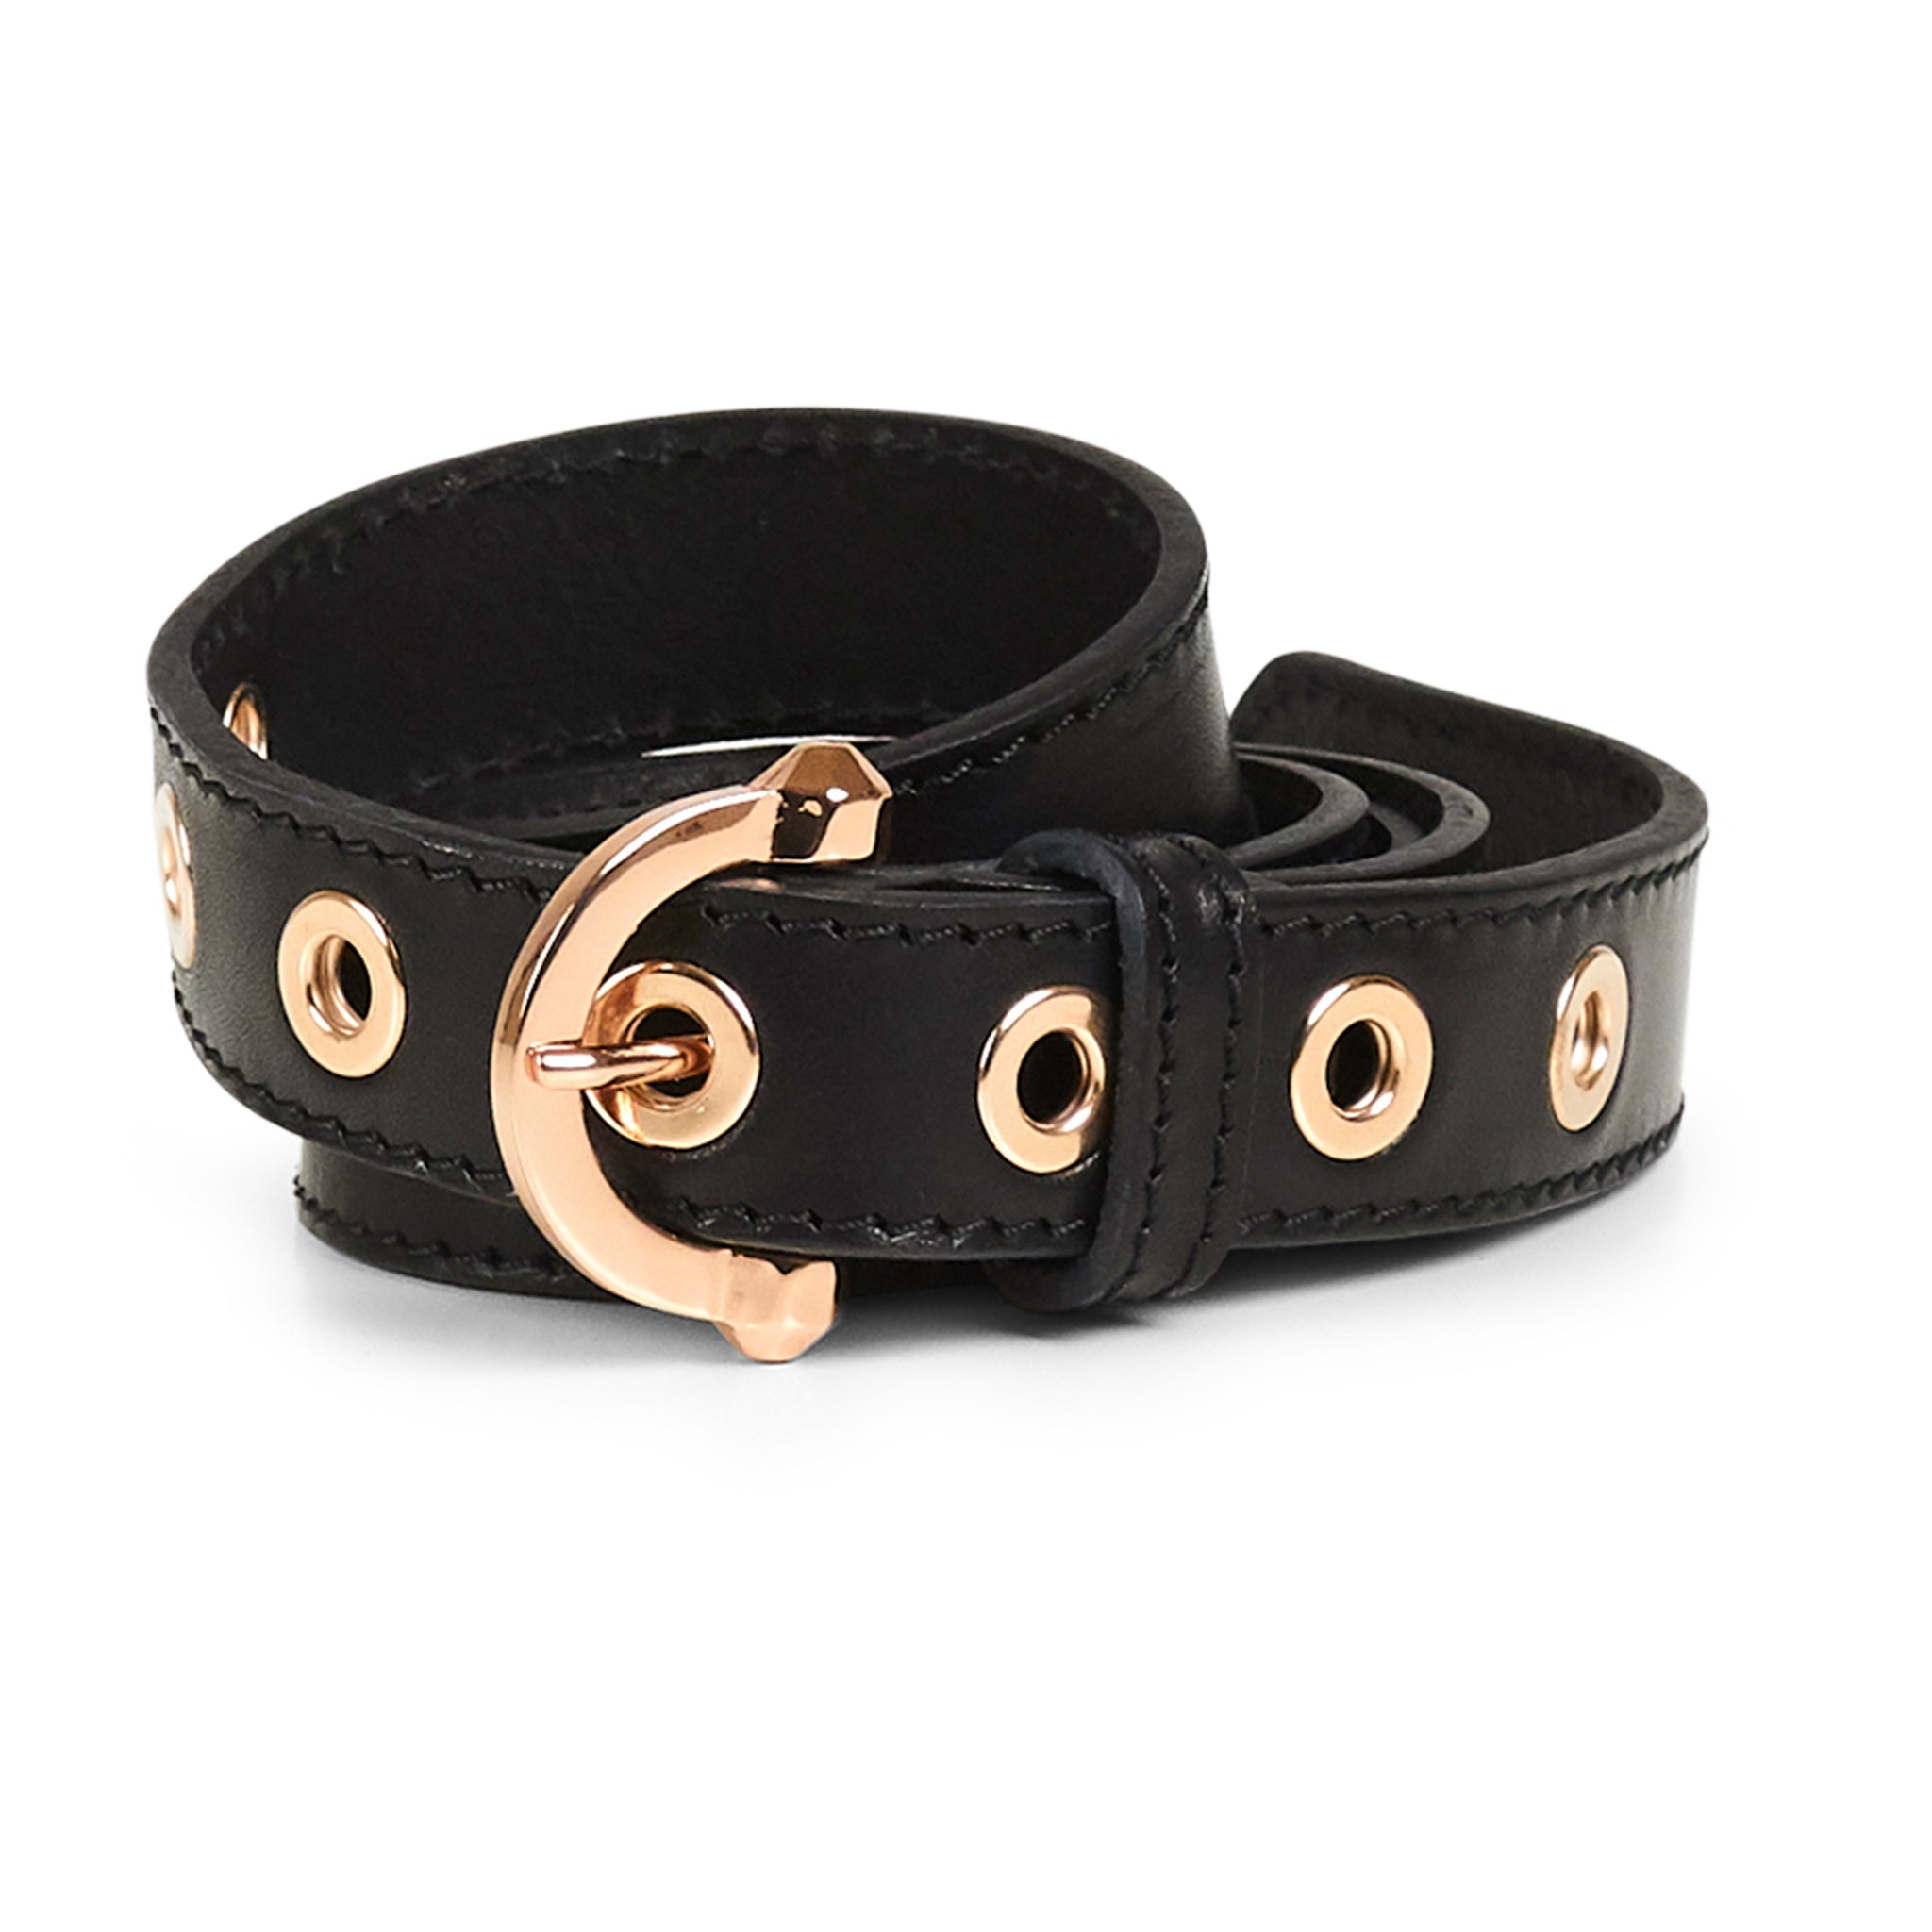 A slim Markberg black leather belt with a rose gold buckle handmade in Italy, TheodoraMBG Belt - Black/Rose Gold.